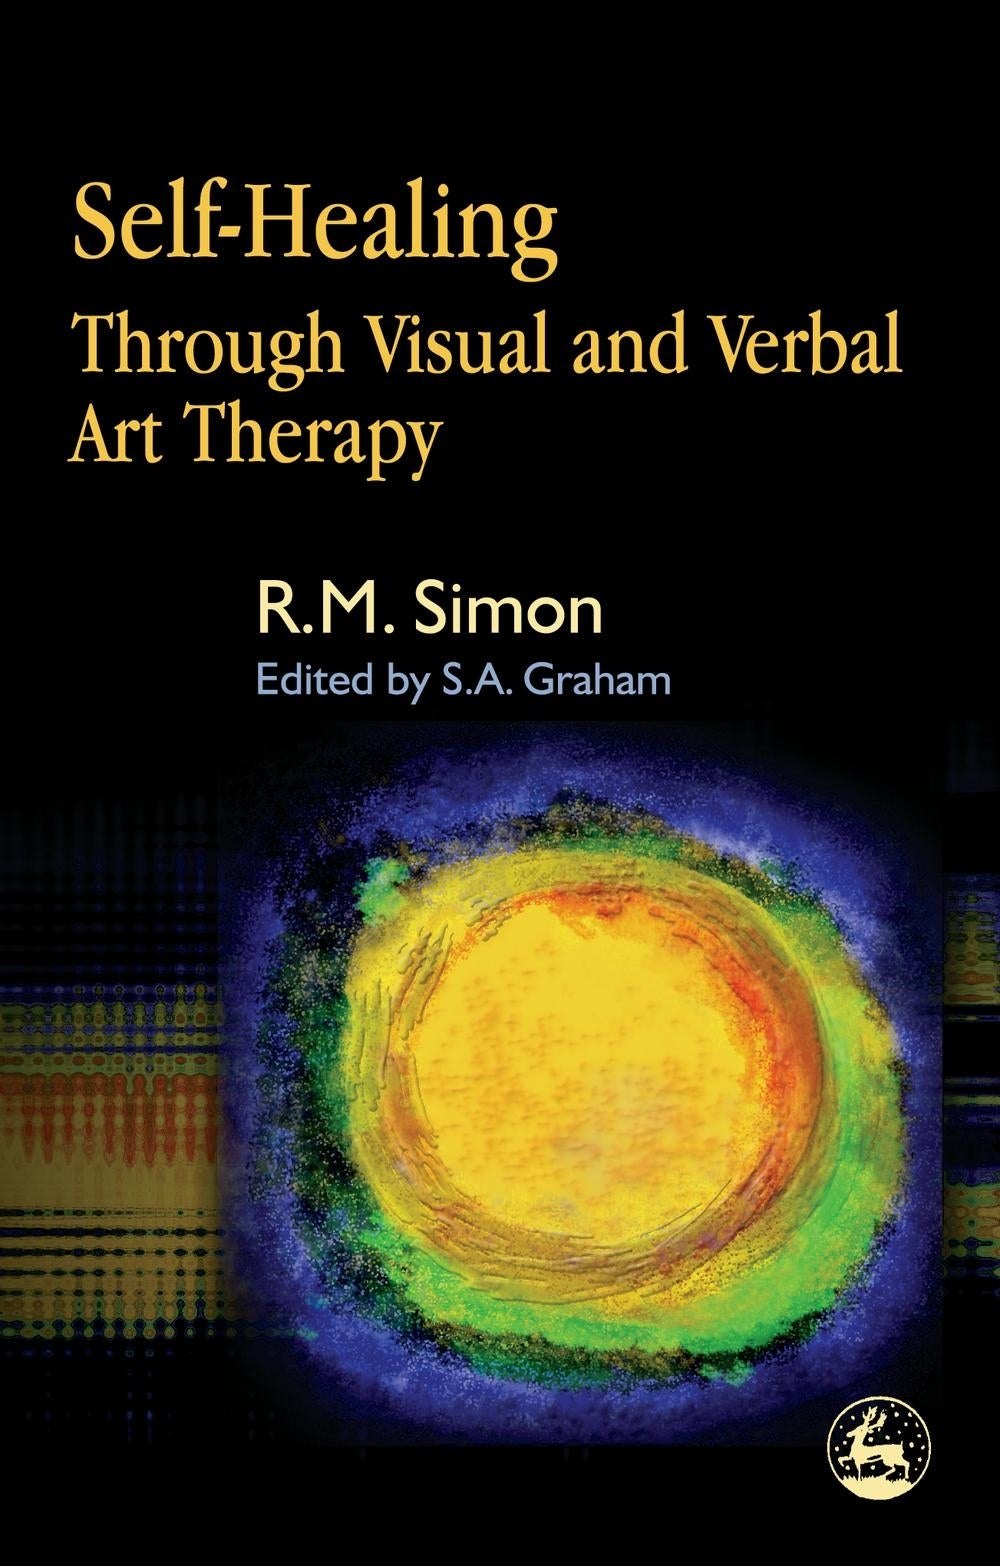 Self-Healing Through Visual and Verbal Art Therapy by David Simon